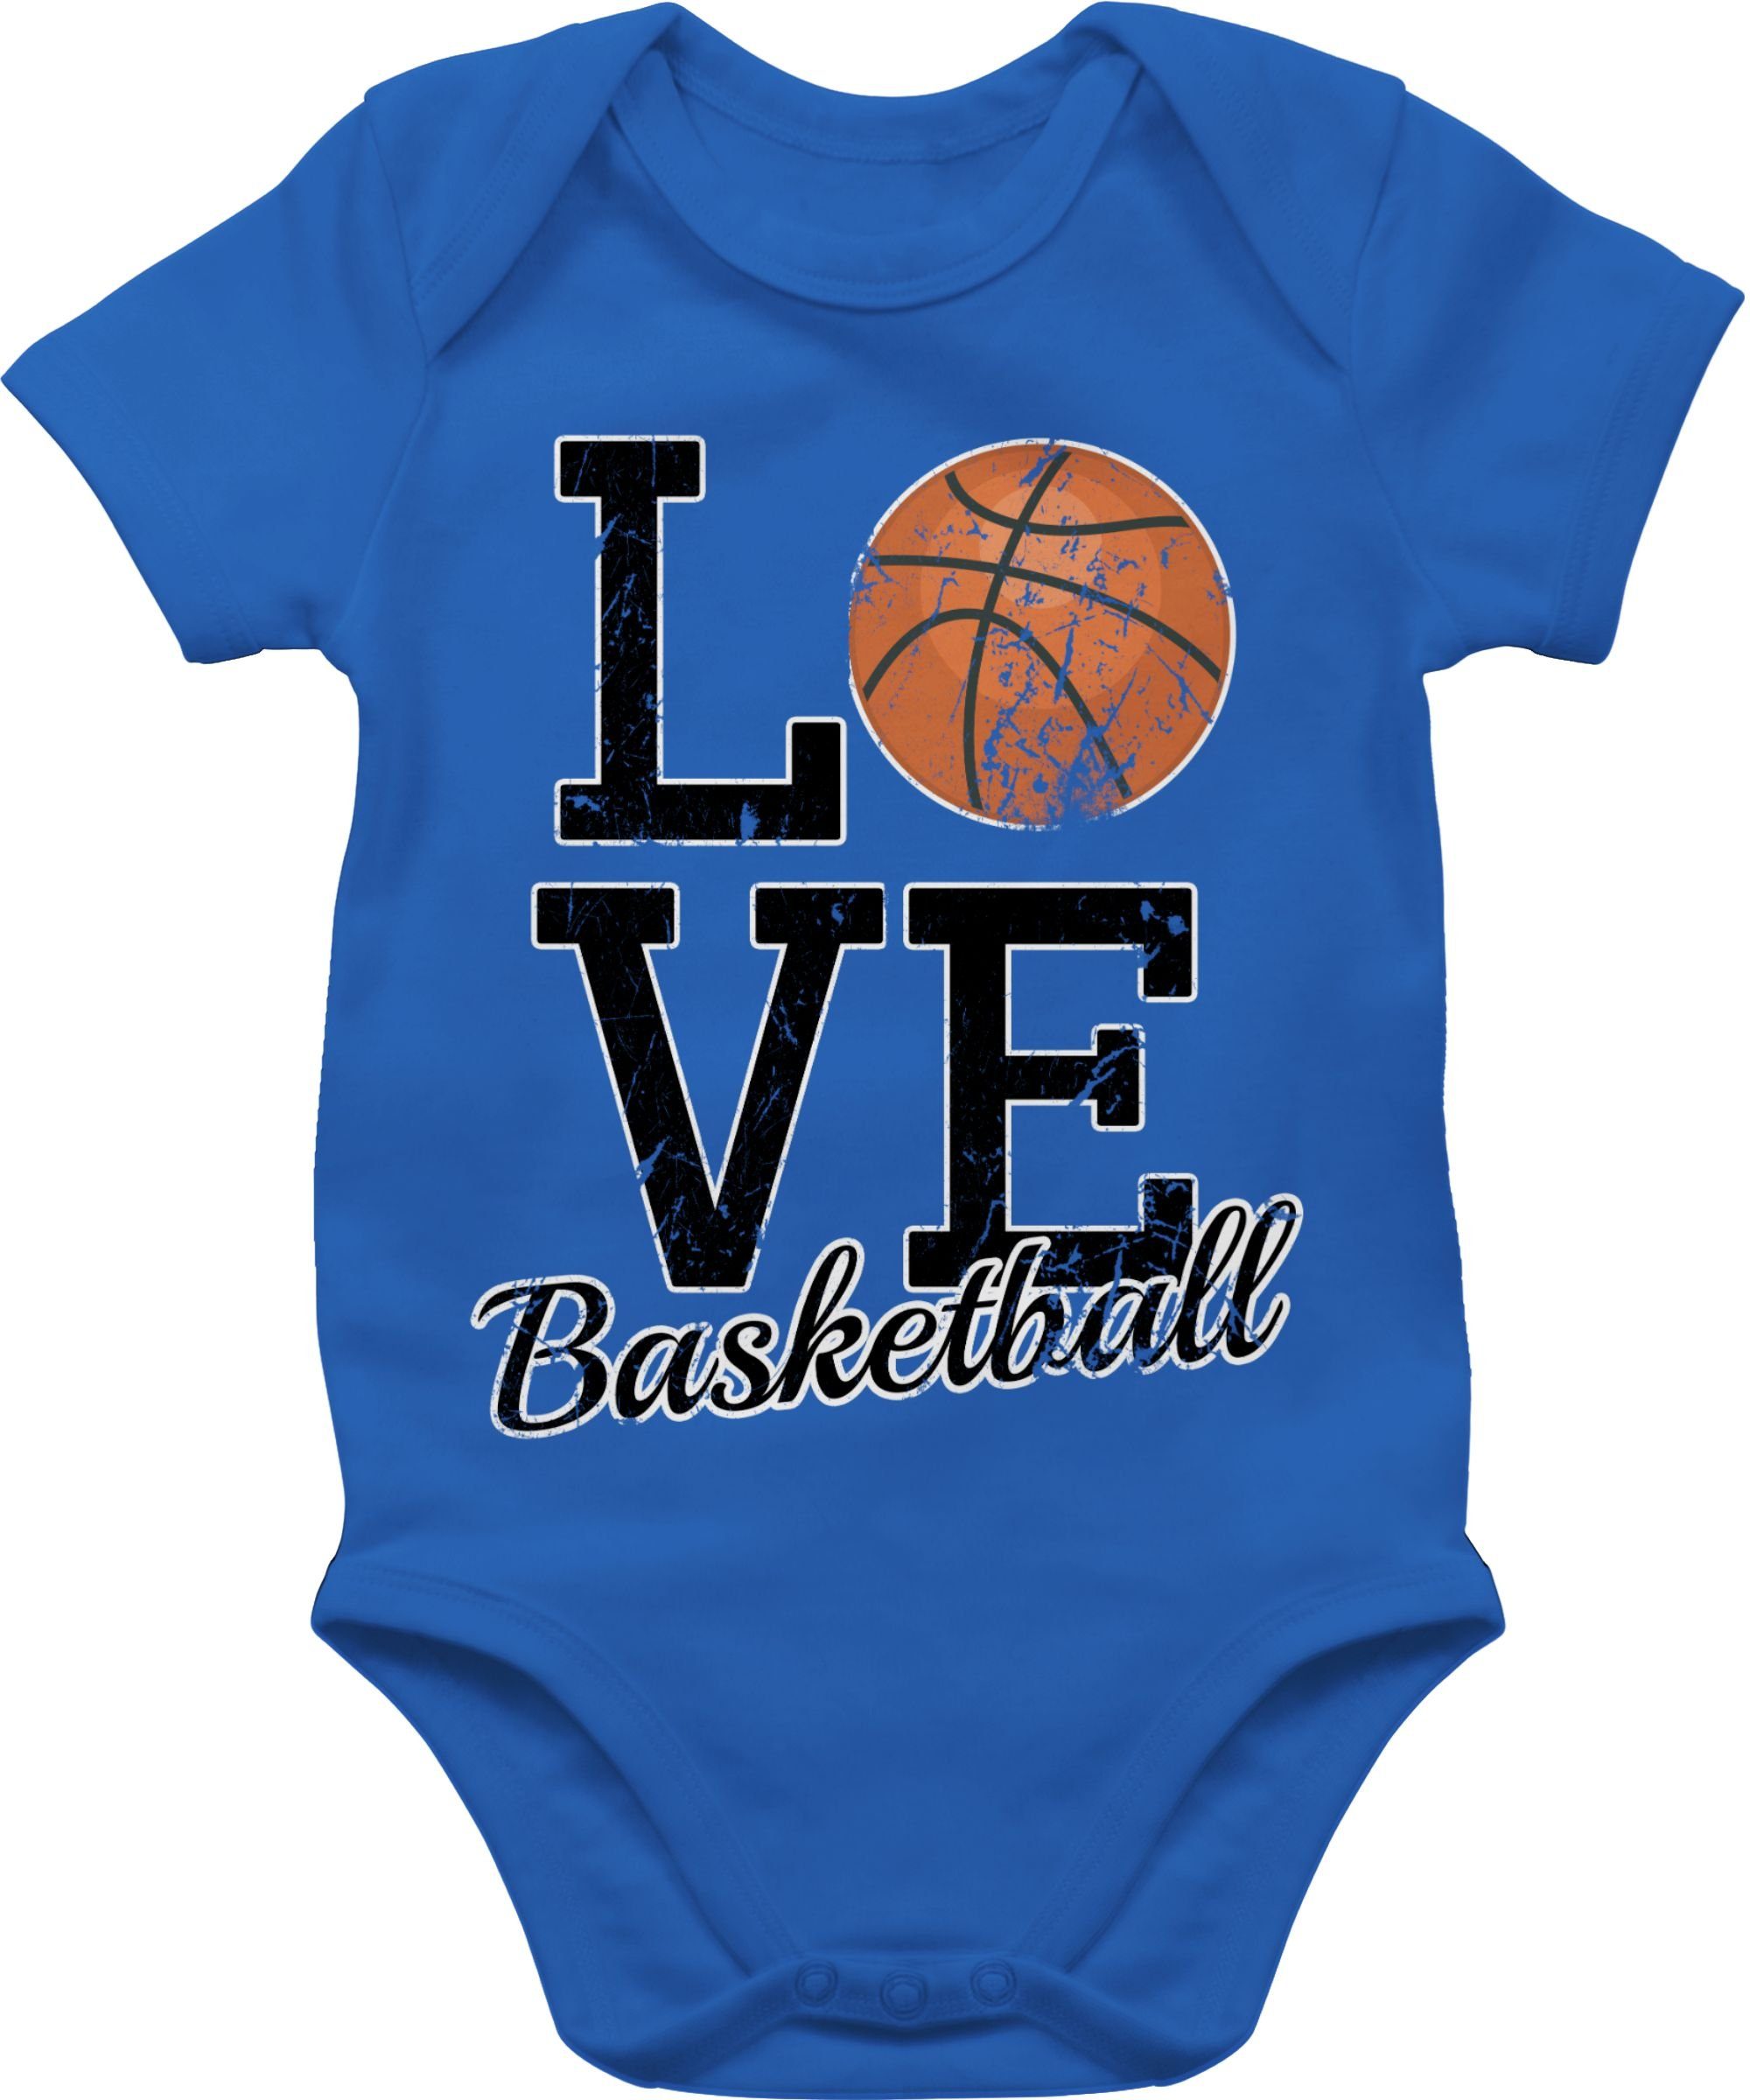 Shirtracer Shirtbody Love Basketball Sport & Bewegung Baby 2 Royalblau